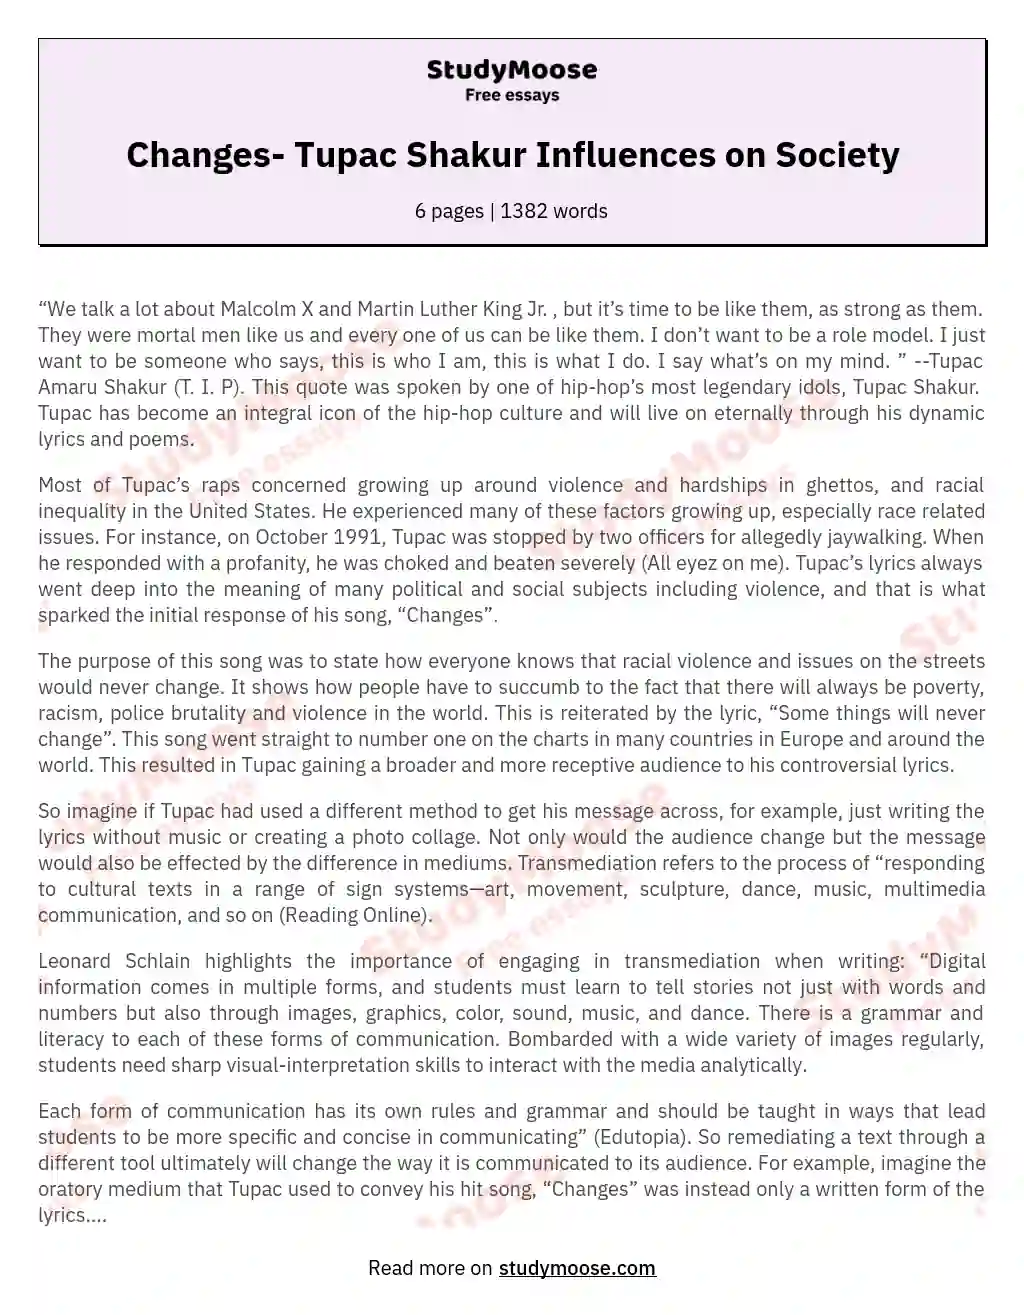 Changes- Tupac Shakur Influences on Society essay